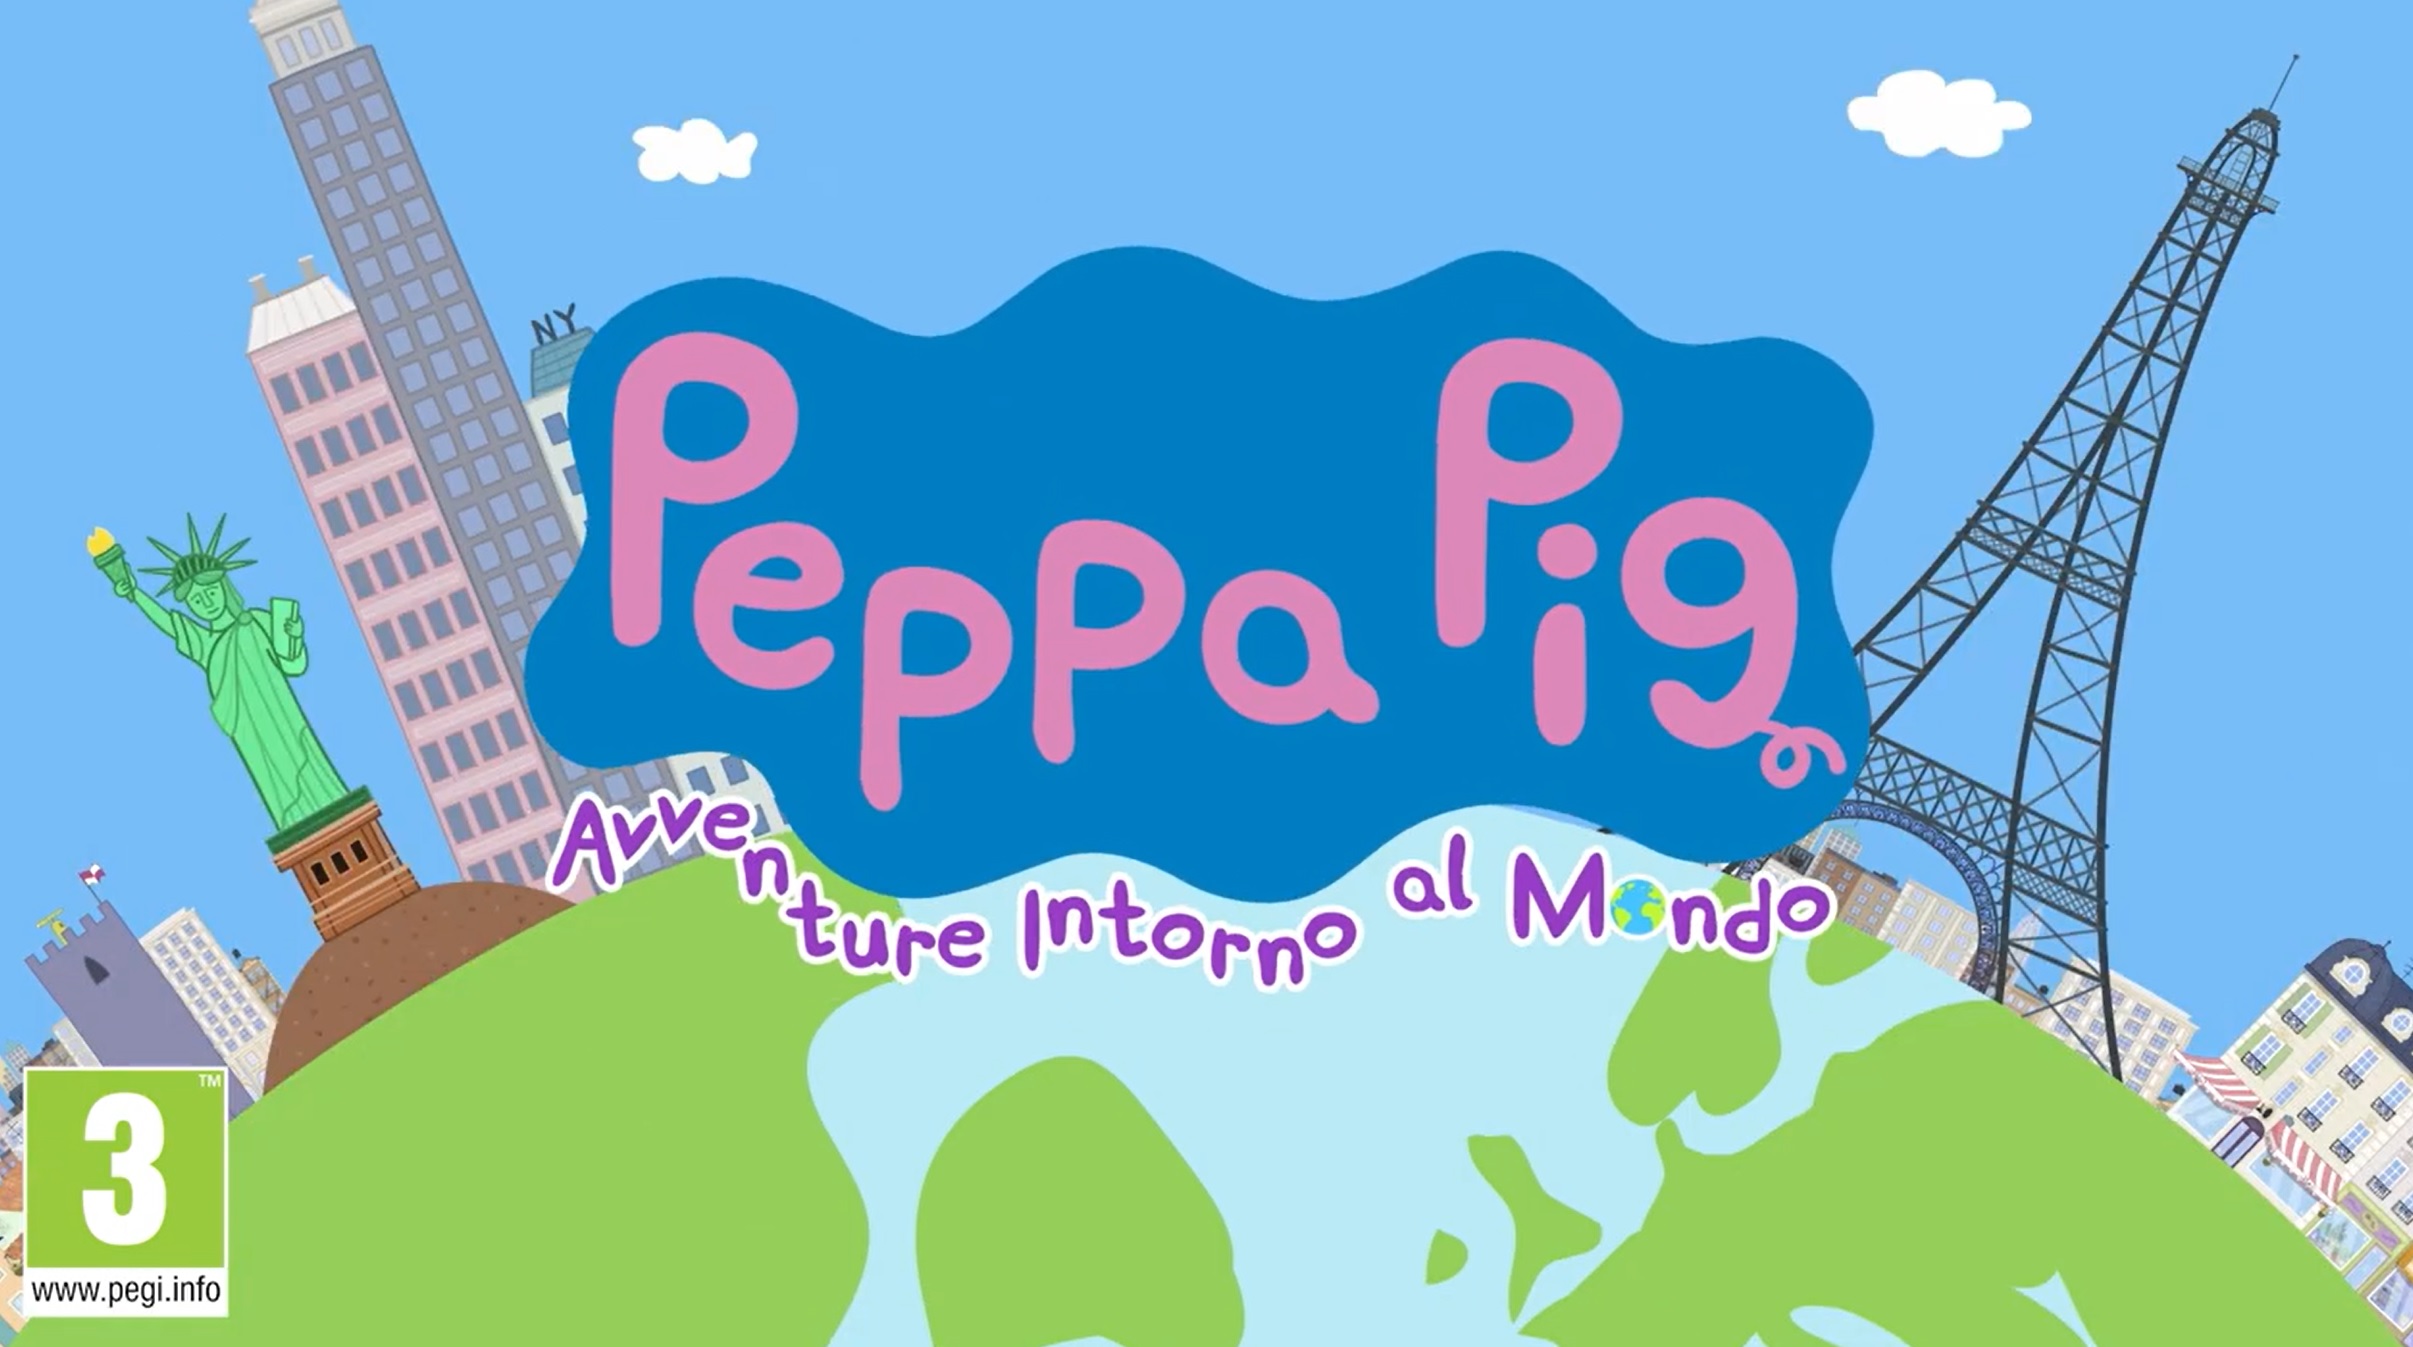 Peppa Pig in Peppa Pig: Avventure Intorno al Mondo disponibile